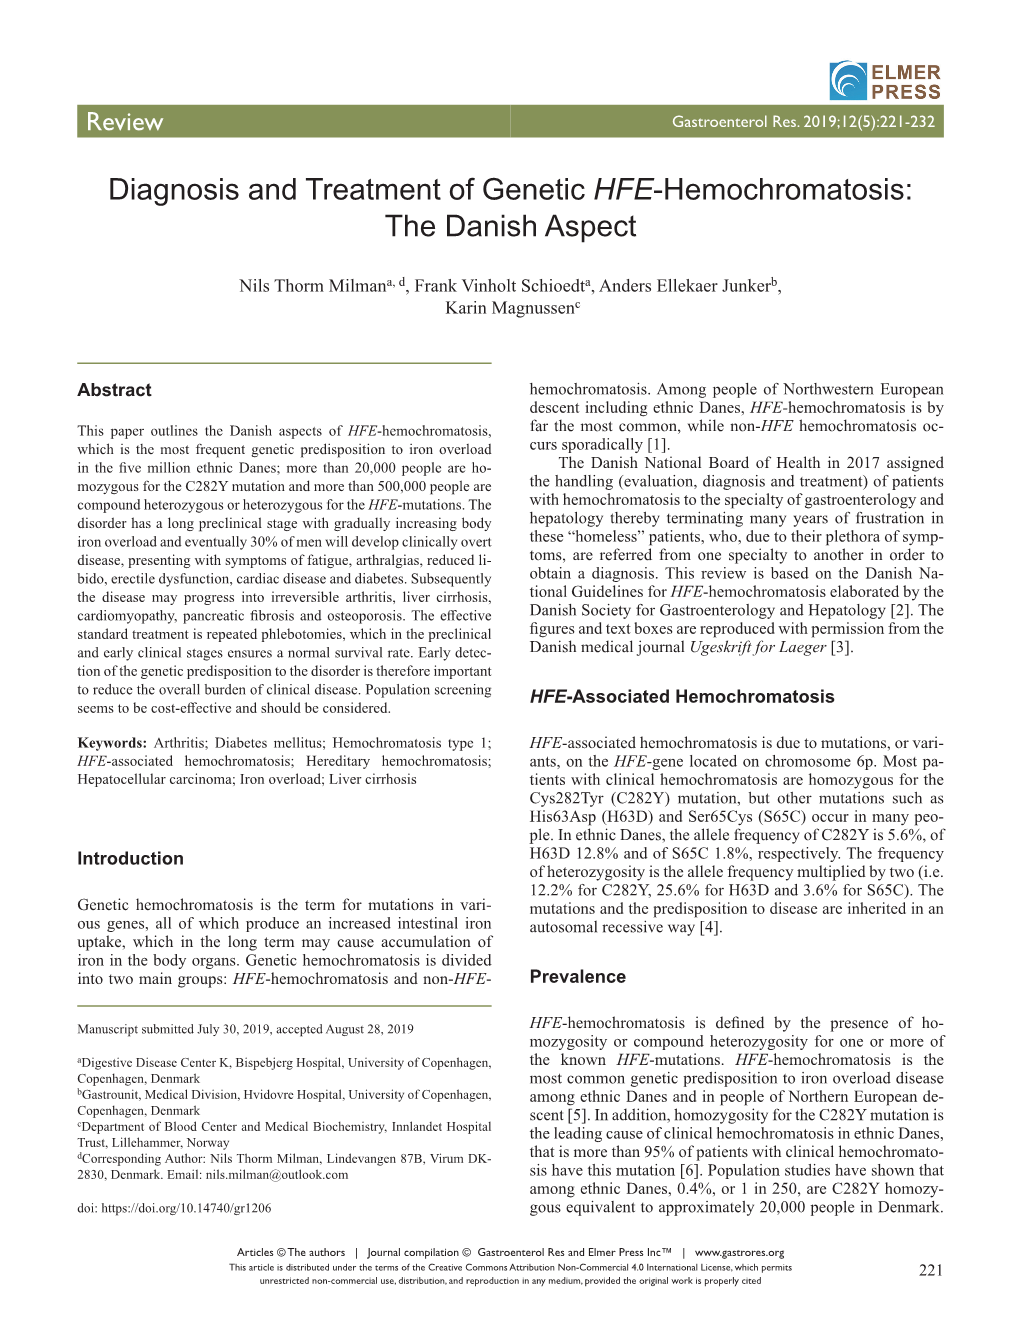 Diagnosis and Treatment of Genetic HFE-Hemochromatosis: the Danish Aspect